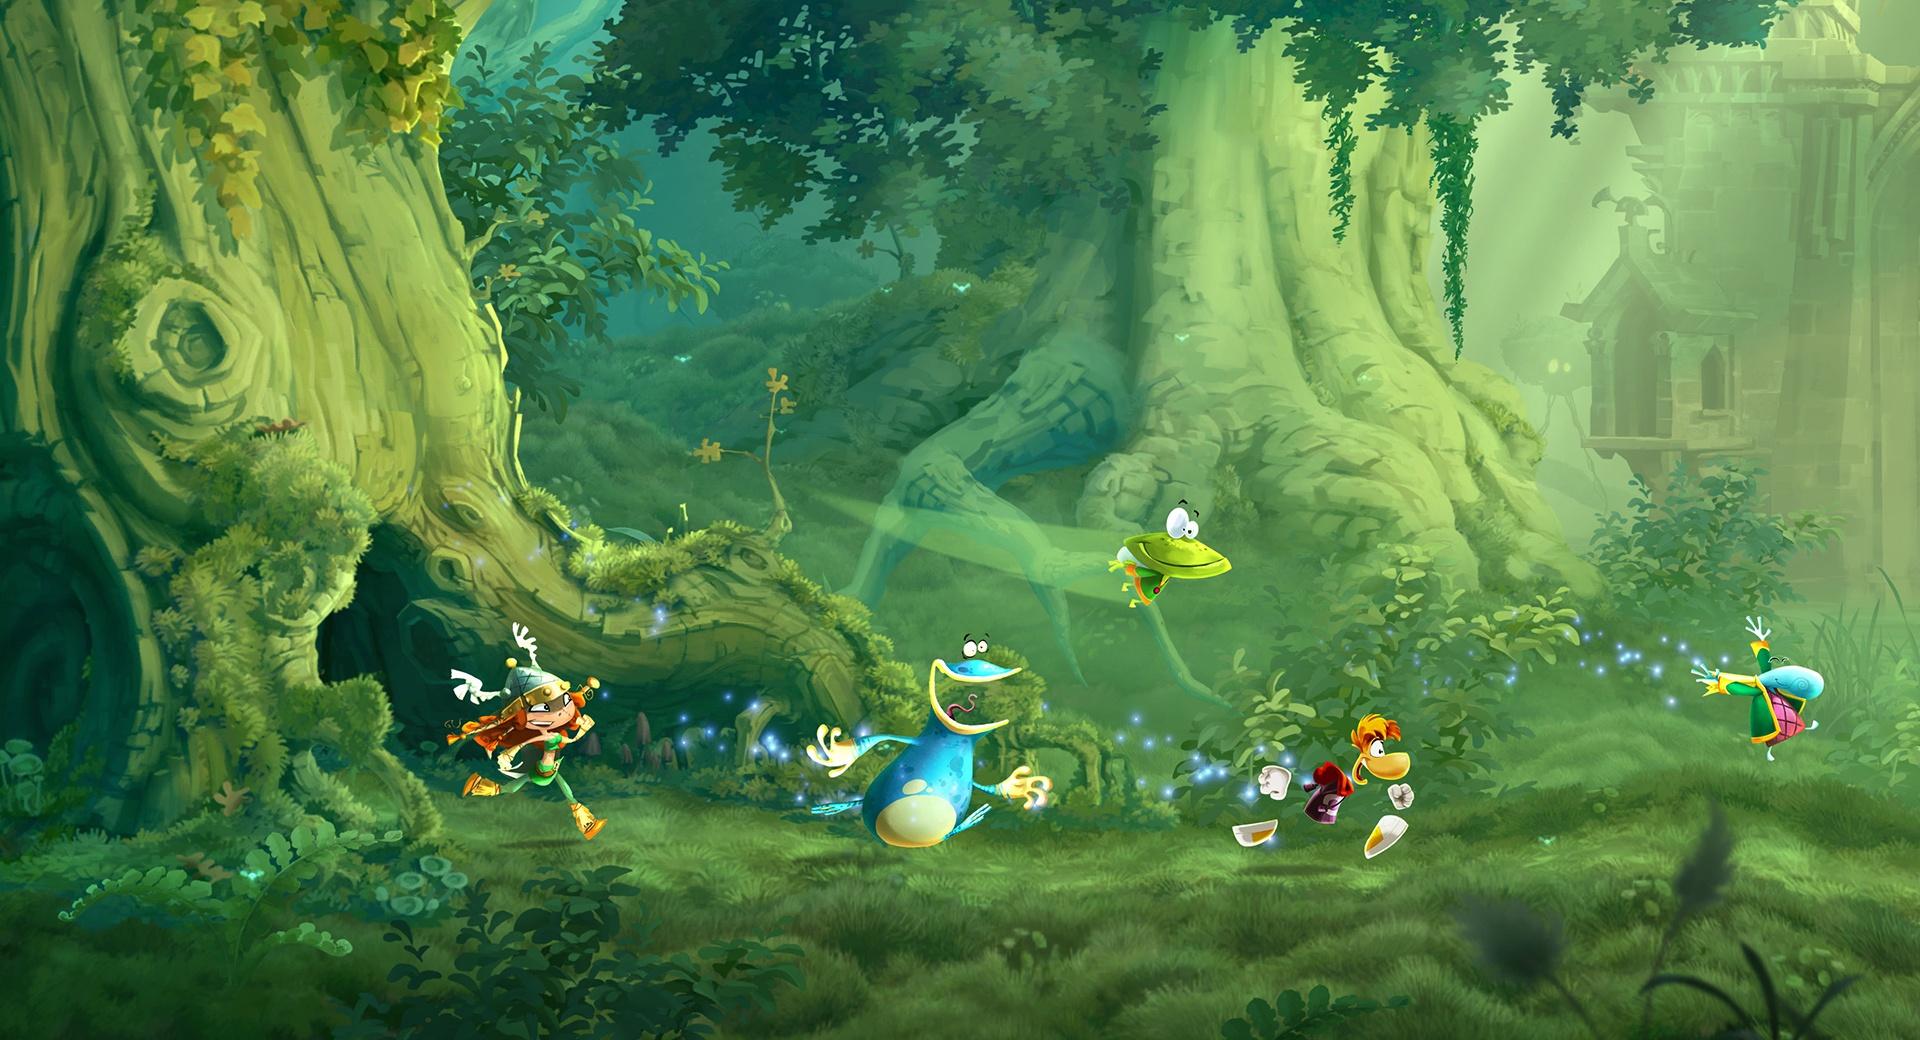 Rayman Legends Screenshots at 1280 x 960 size wallpapers HD quality